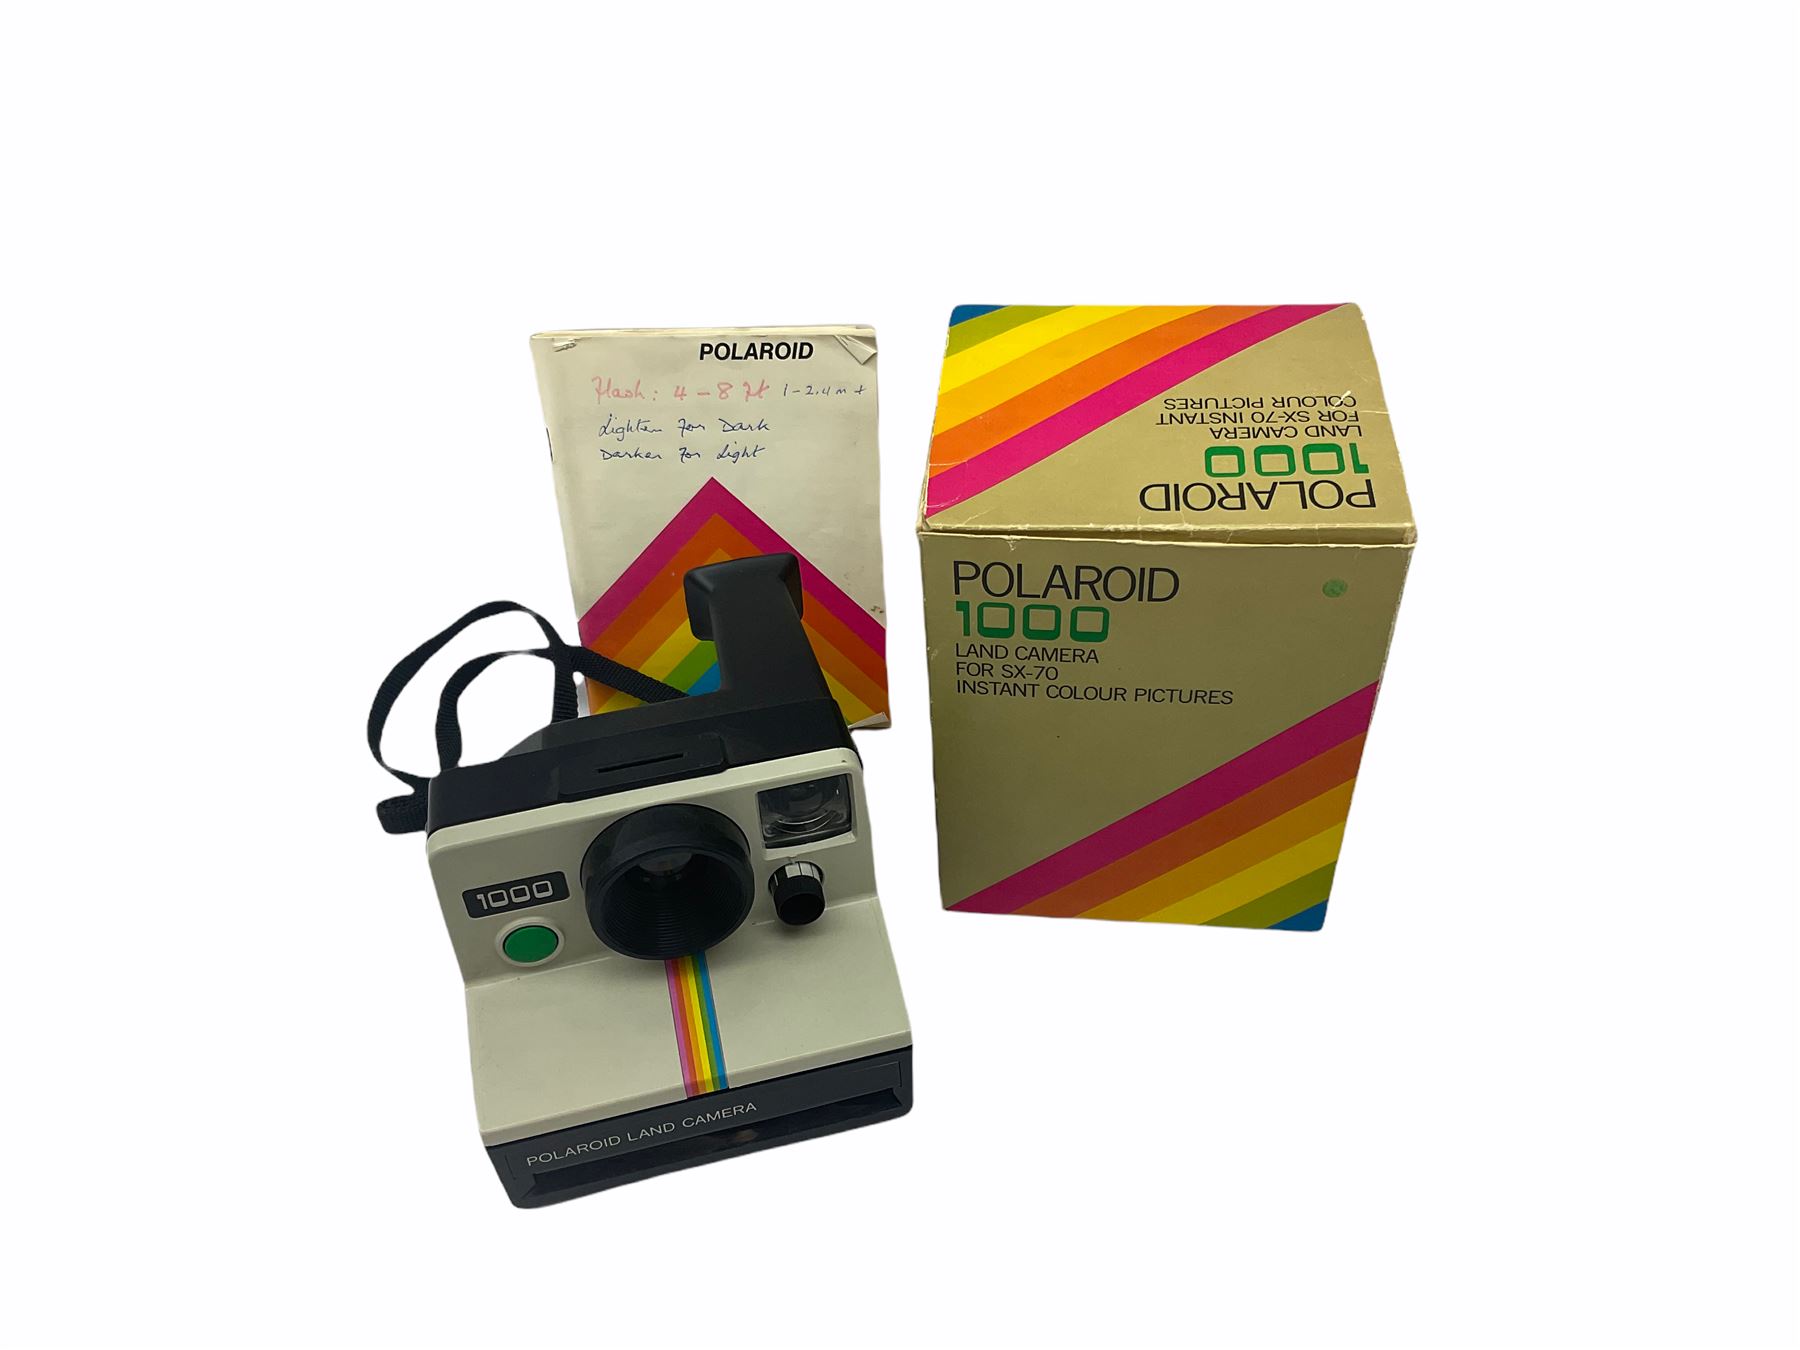 Boxed Polaroid 1000 camera - Image 2 of 2